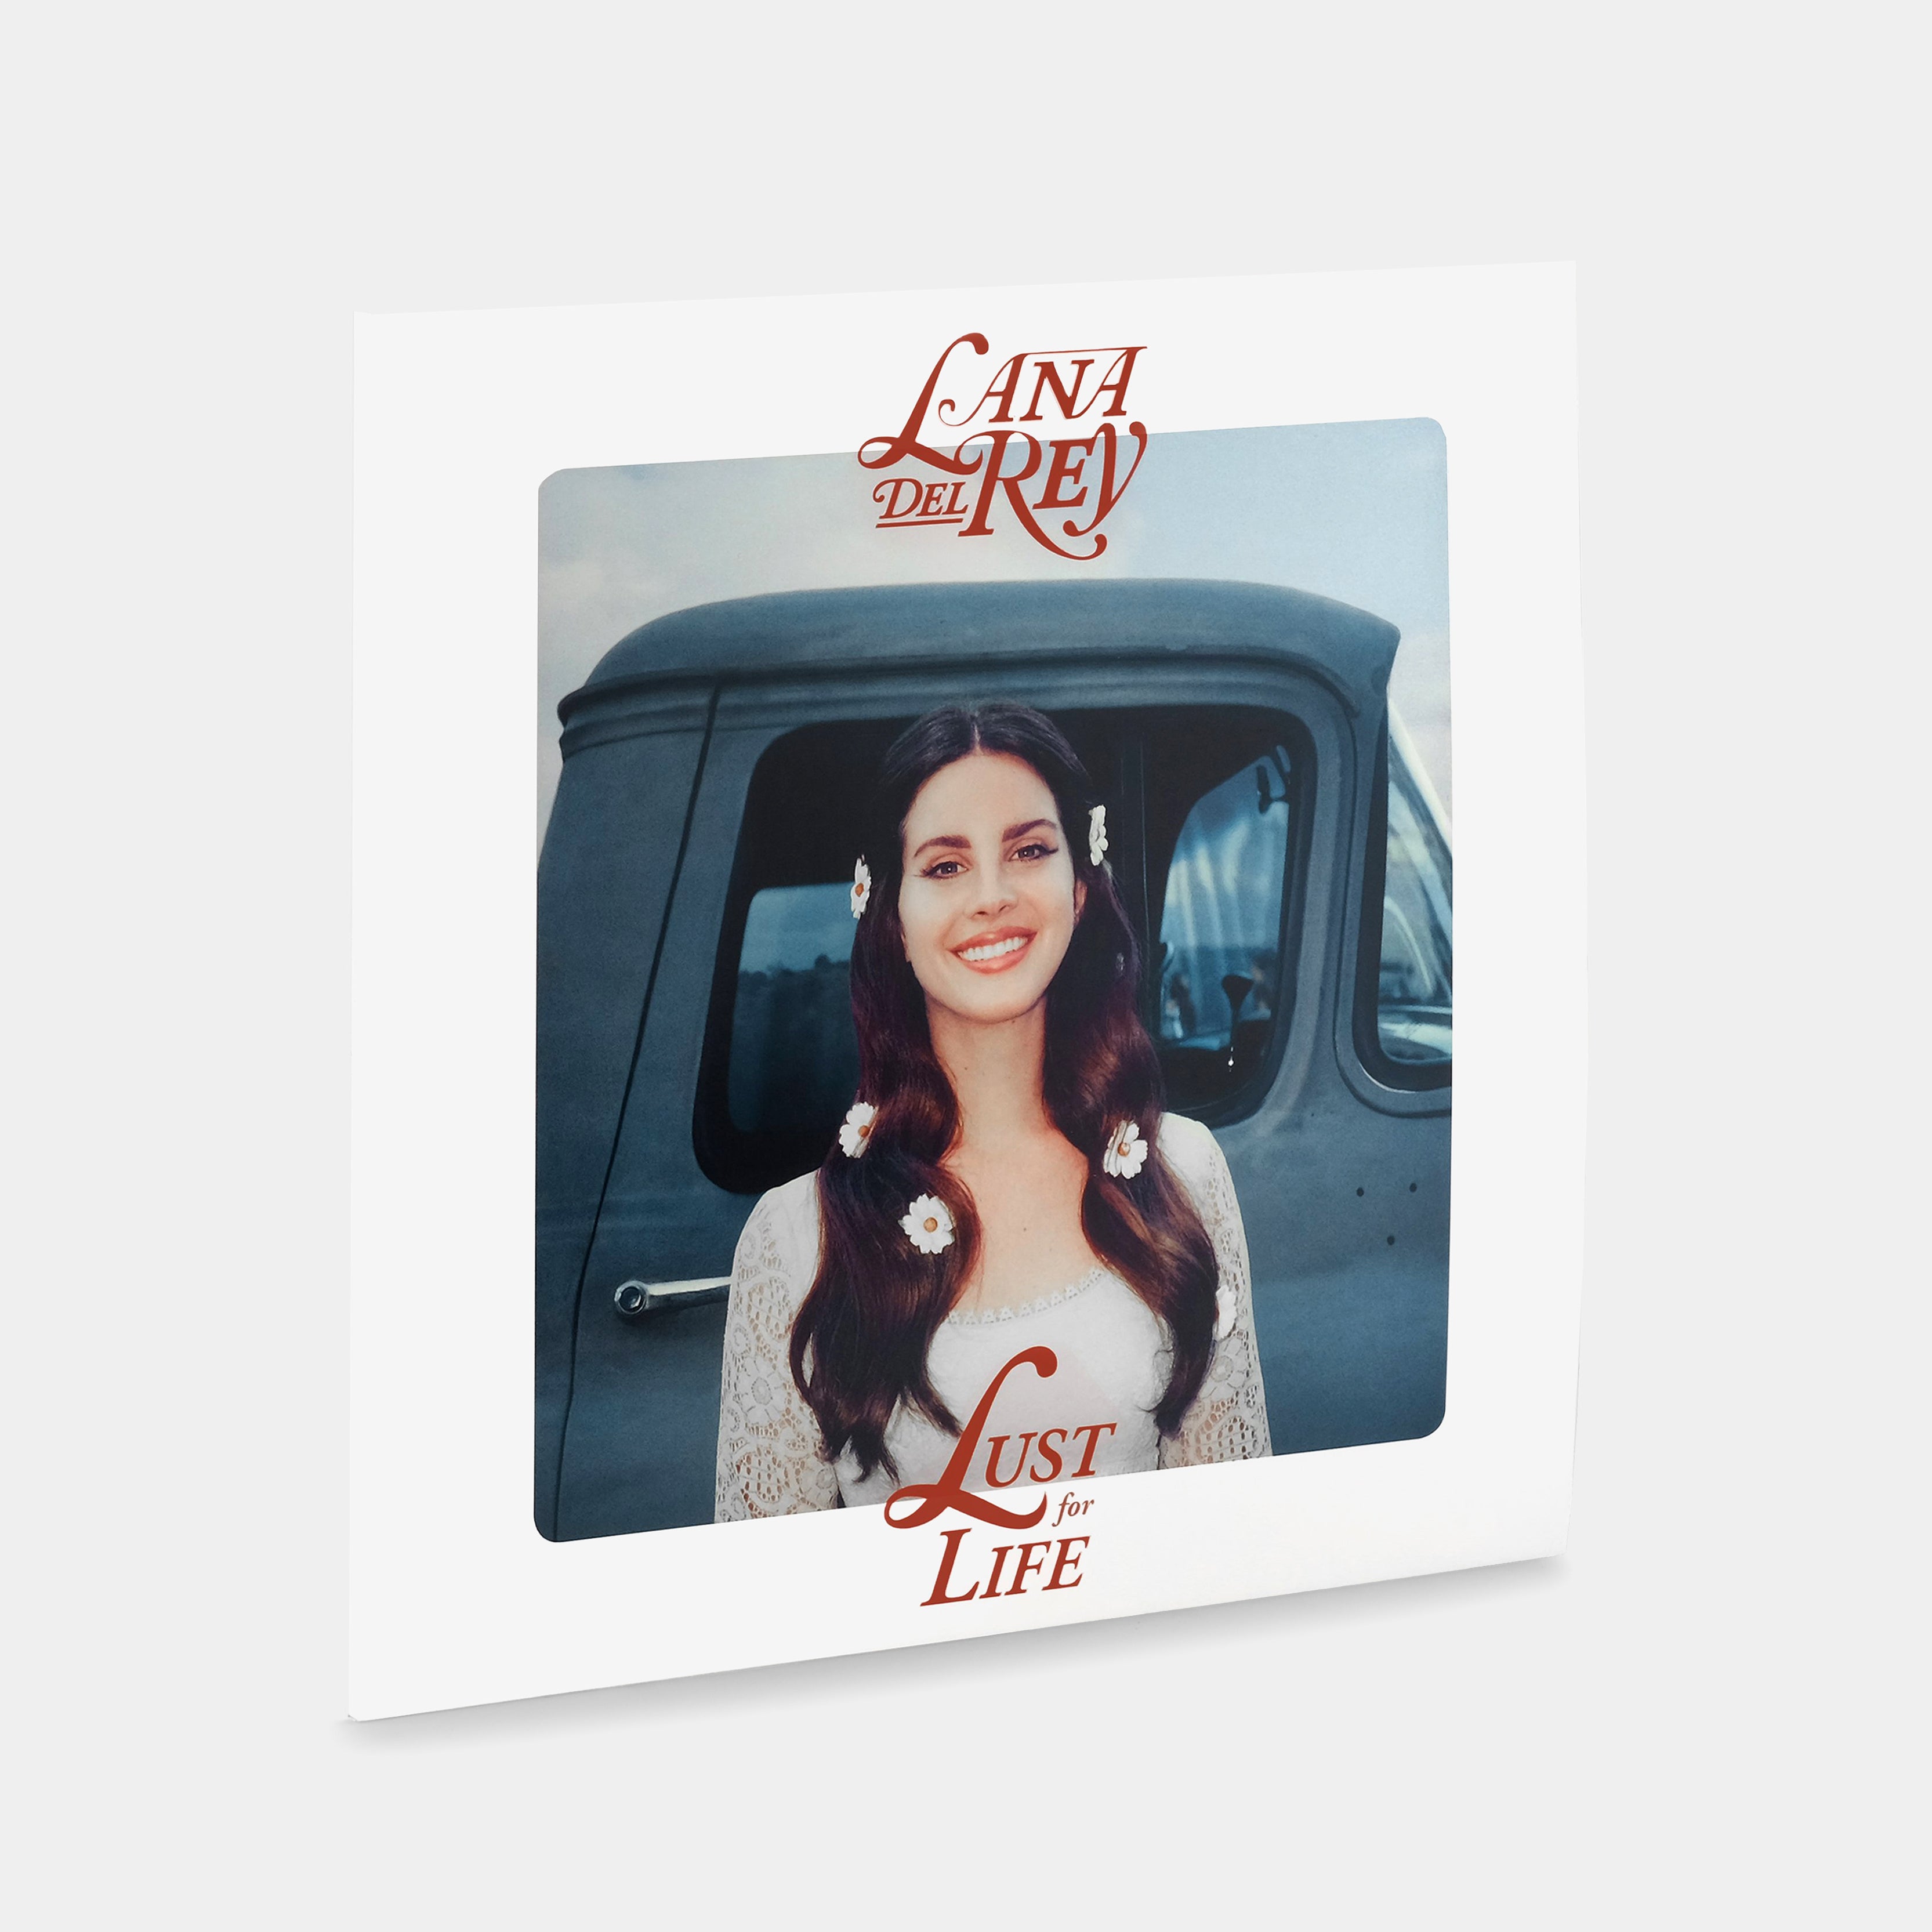 Lana Del Rey - Lust For Life 2xLP Vinyl Record